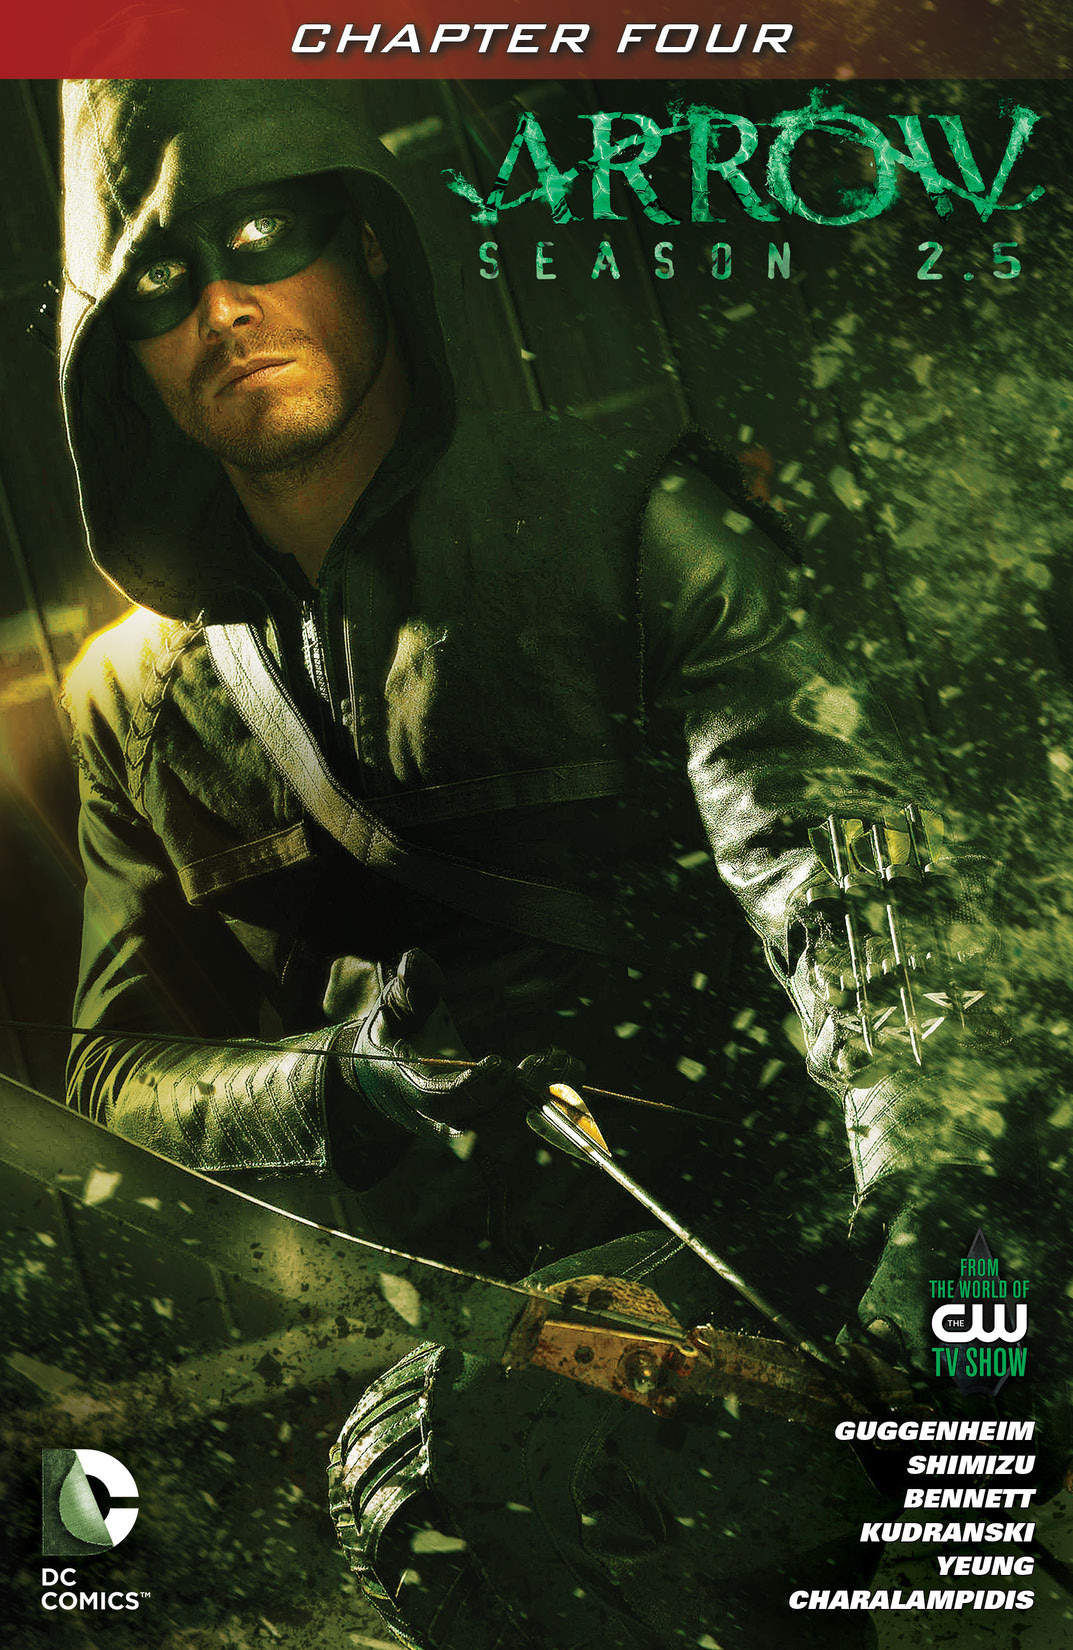 Arrow: Season 2.5 #4 preview images